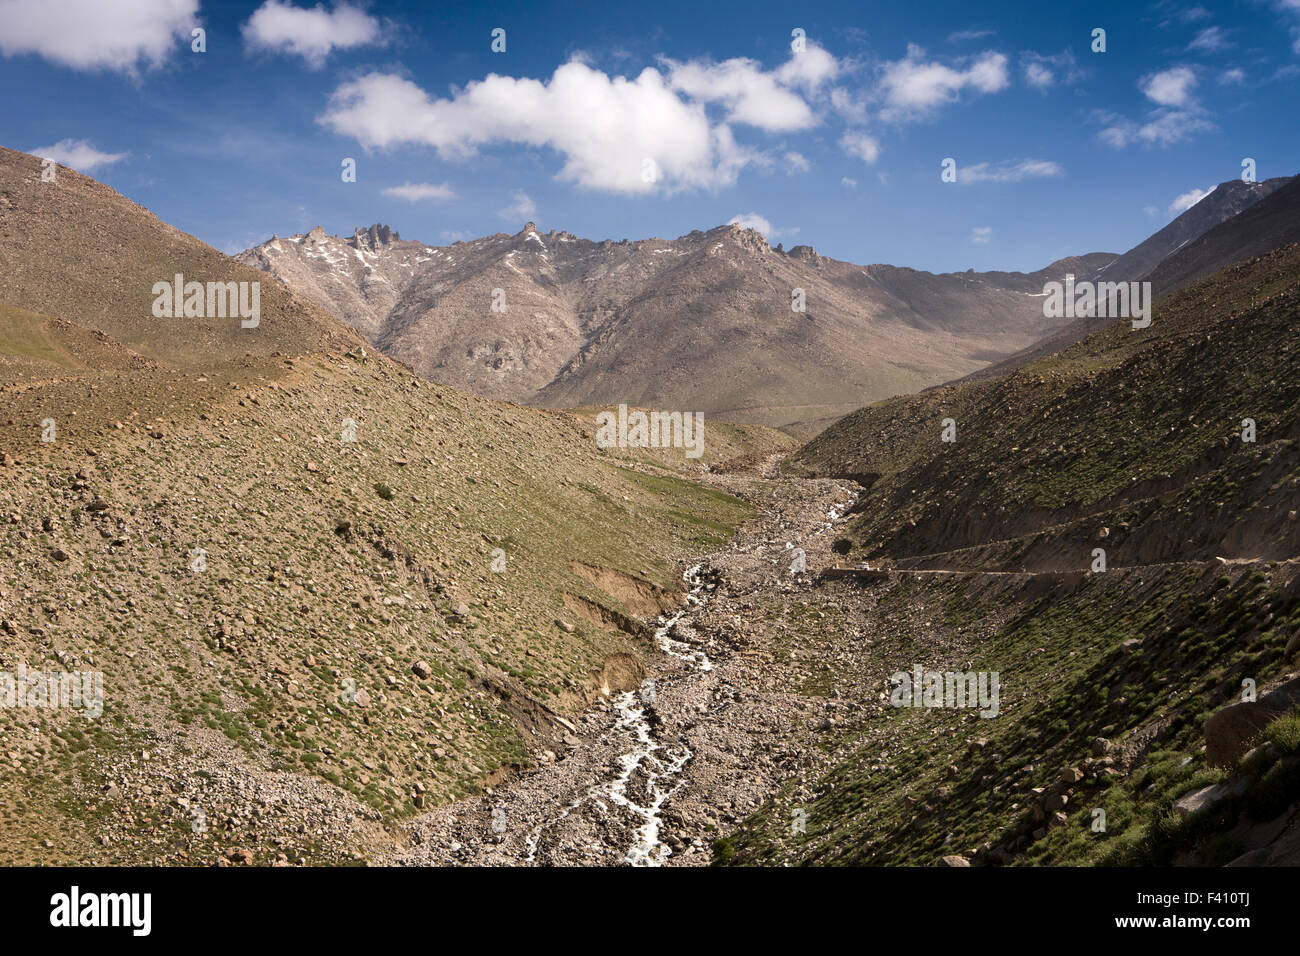 India, Jammu & Kashmir, Ladakh, Leh, meltwater stream in Ladakh range mountains at Khardung La pass Stock Photo